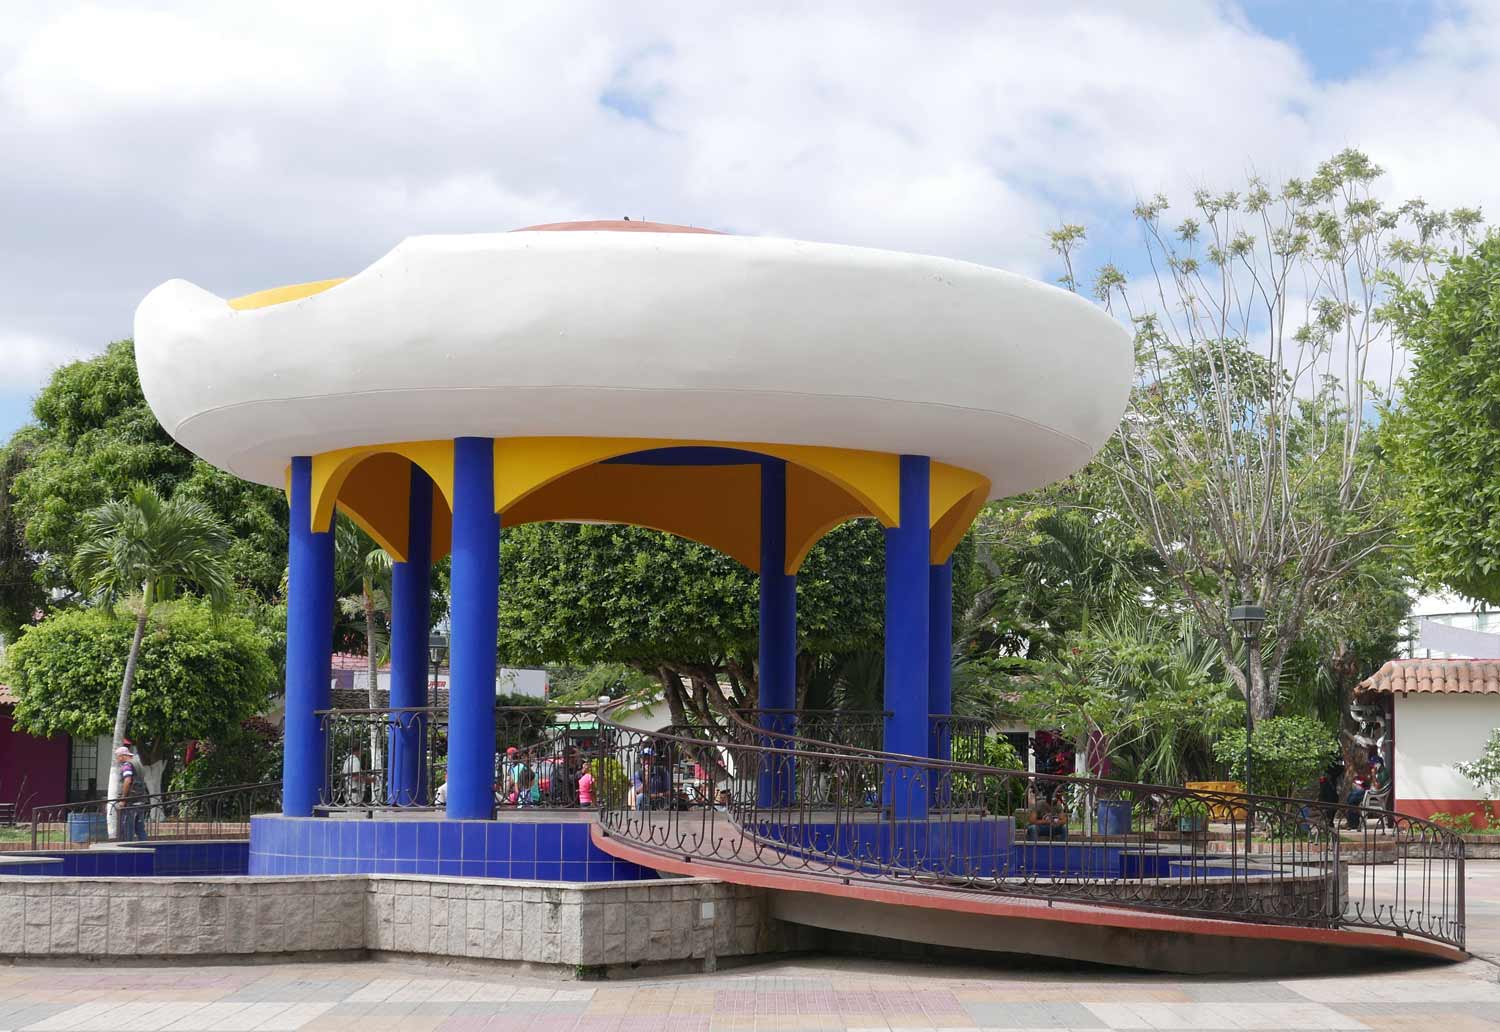 Kiosk in Parque Central in Esteli, Nicaragua